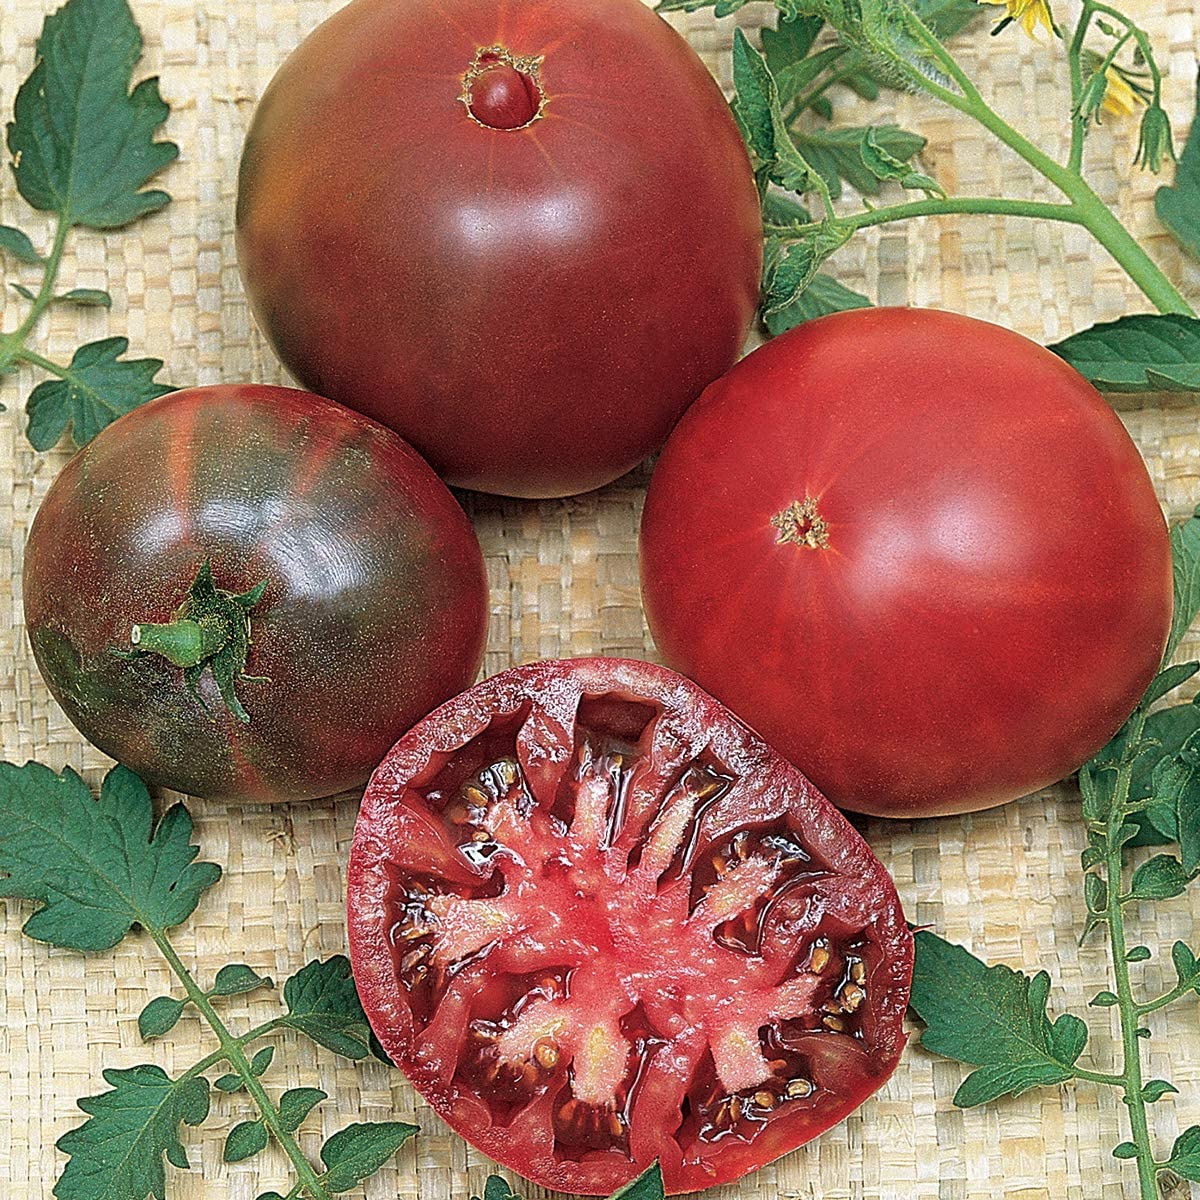 https://www.stclareseeds.com/garden-help/wp-content/uploads/2016/06/Tomato-Black-Krim-1.jpg